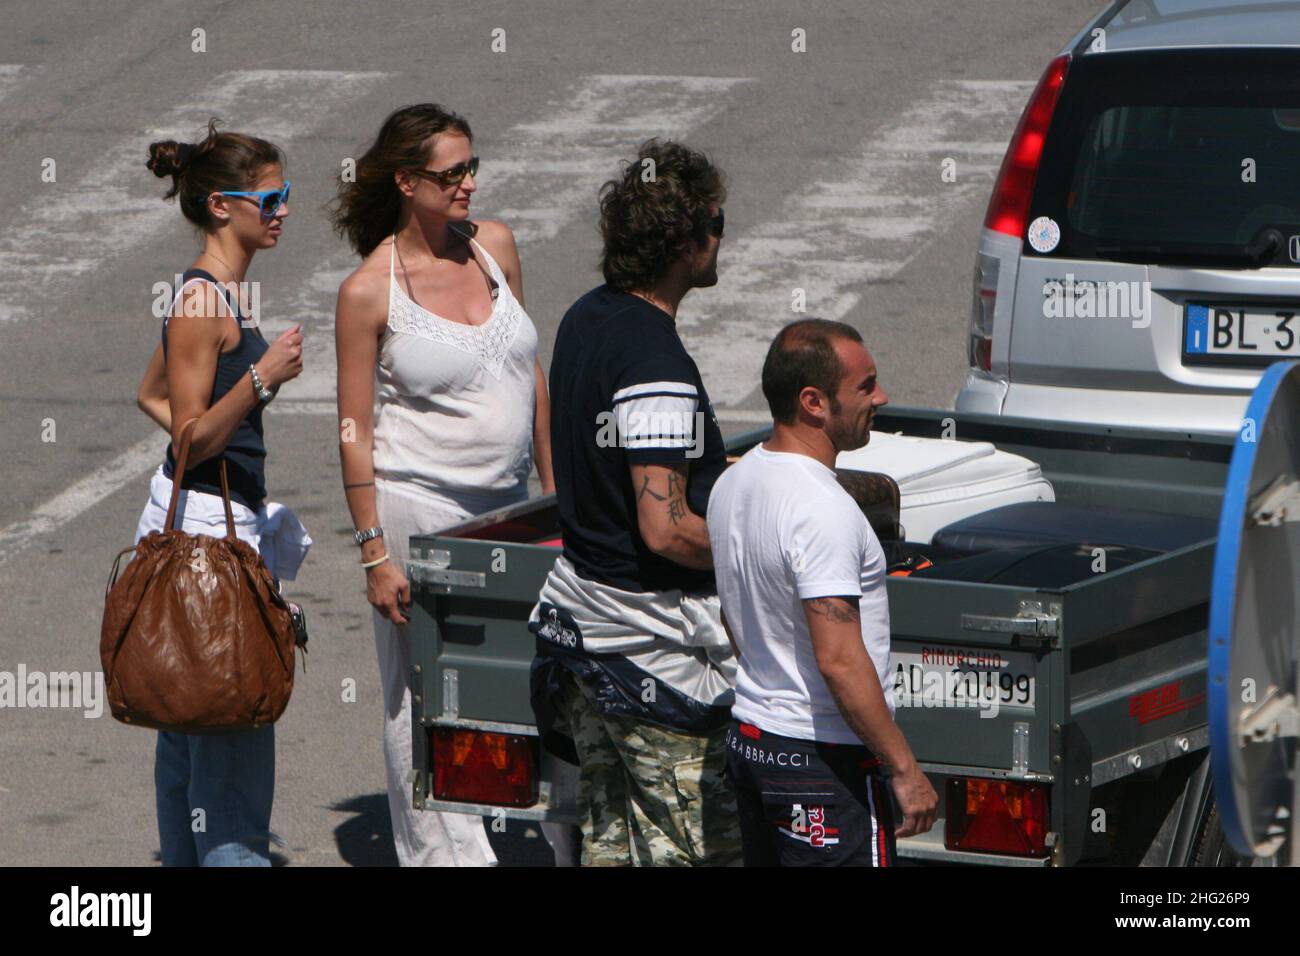 Soccer player Christian Vieri arriving in Formentera with girlfriend Melissa Satta and friend Bombardini with wife Giorgia Palmas, Baleari Islands, Spain.  Stock Photo